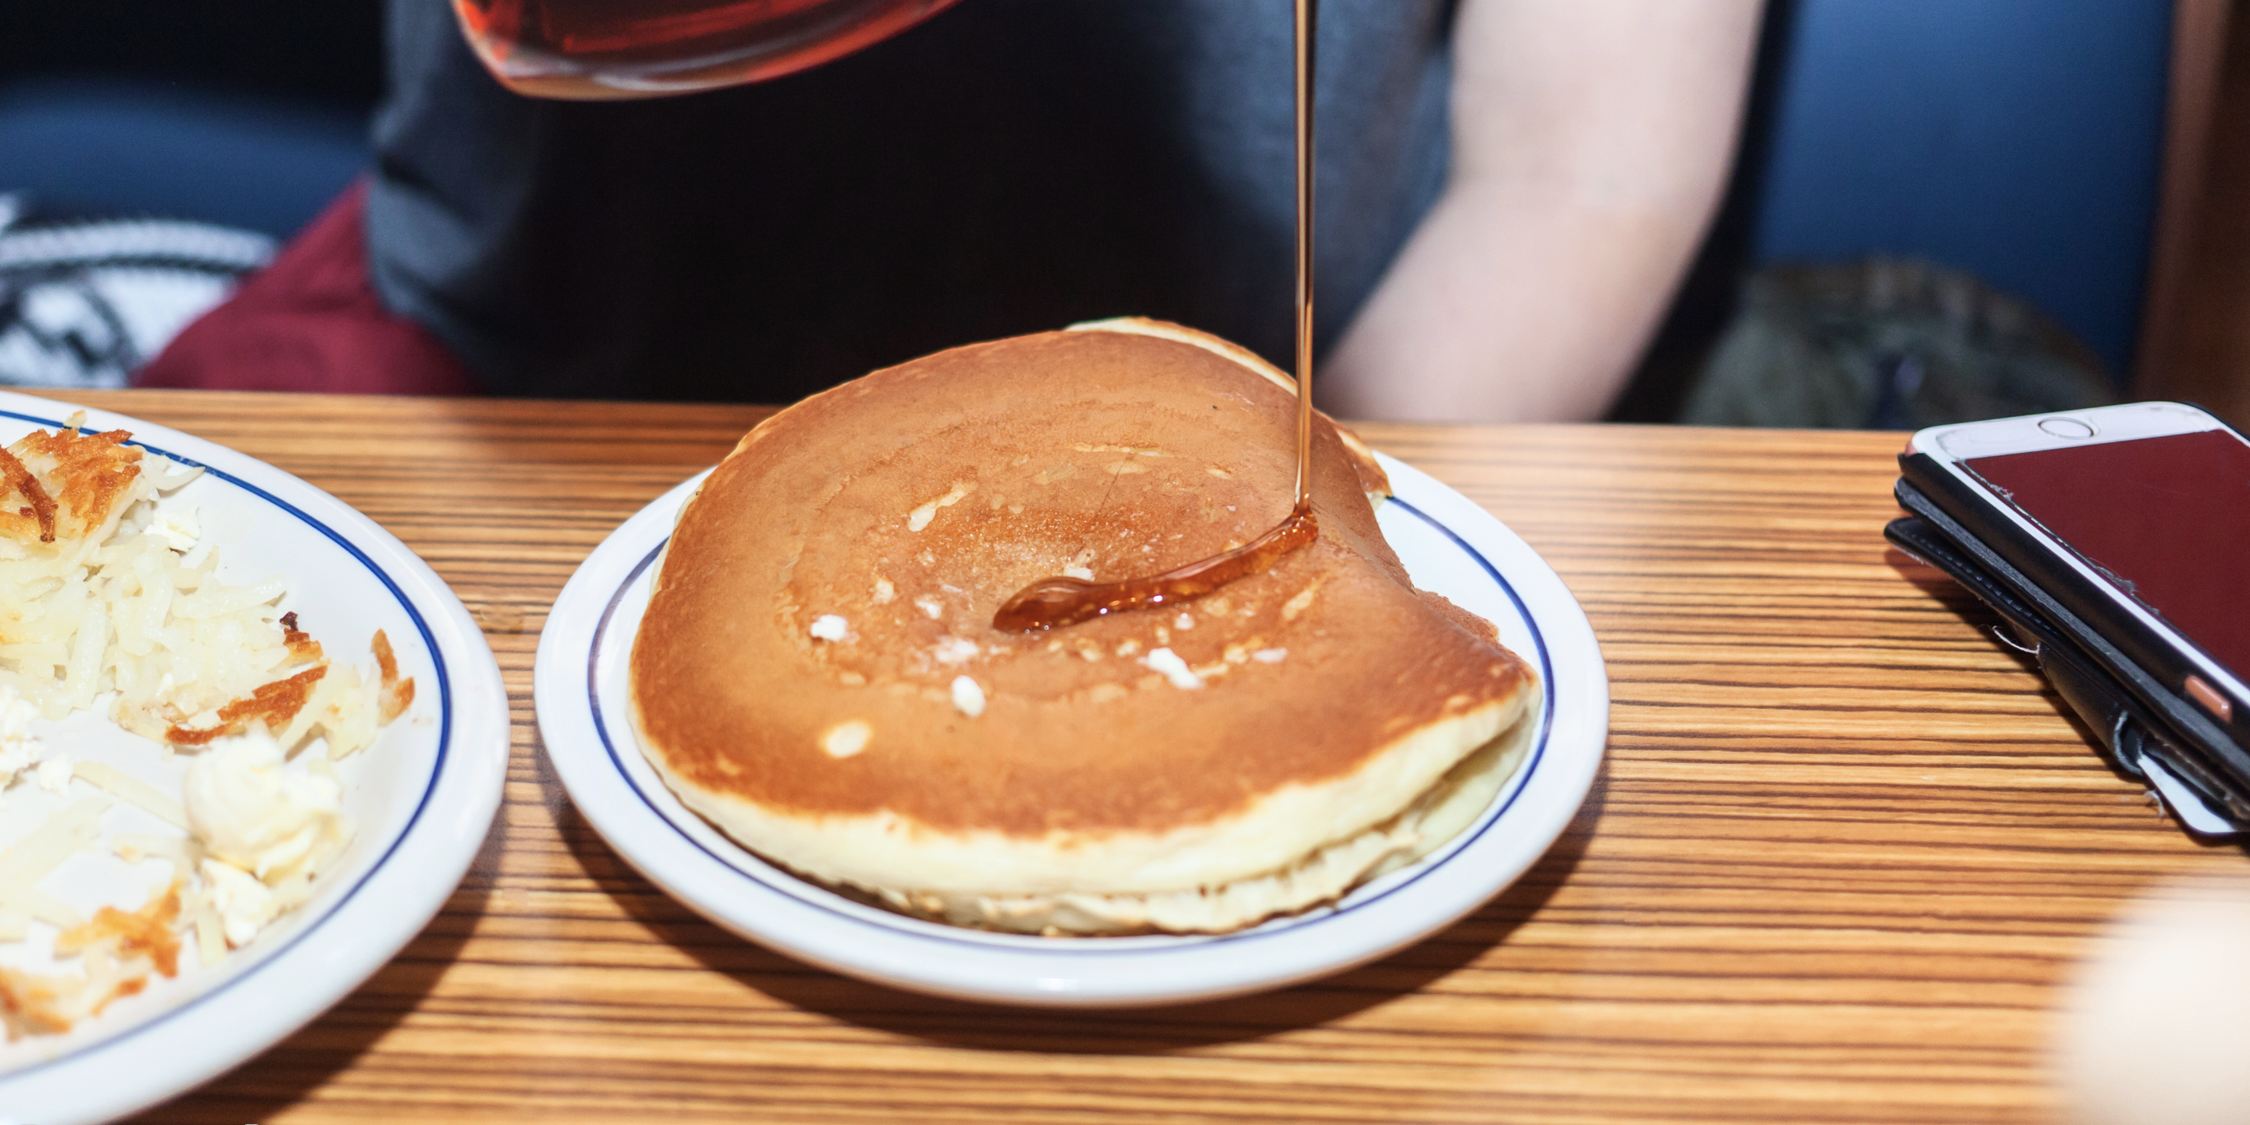 Ihop Has Pancakes For National Pancake Day